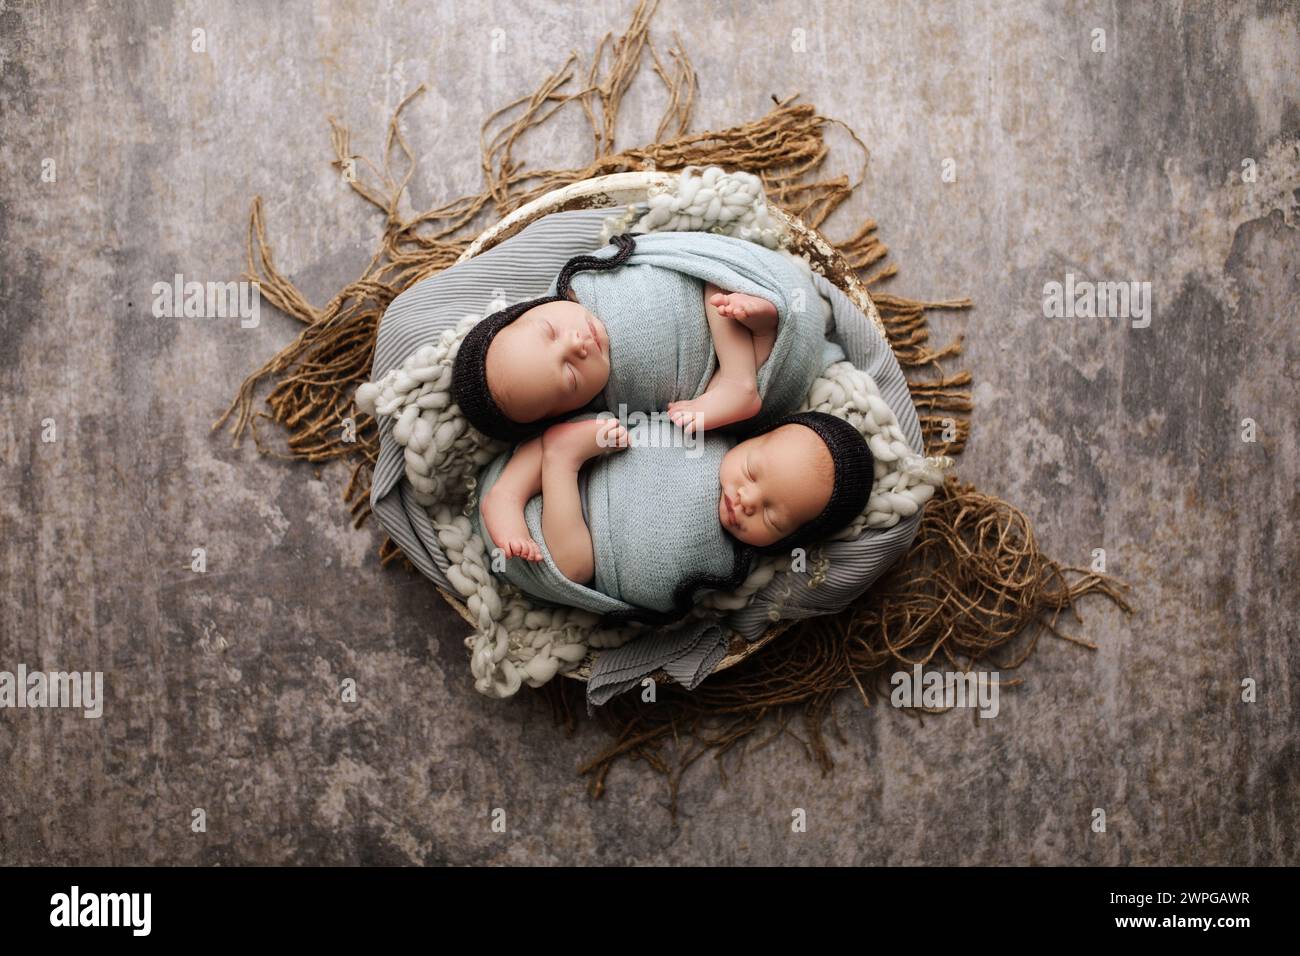 Zwei Babys, Zwillingsjungen, Kleinkinder Zwillingsjungen Neugeborene Fotos. Stockfoto